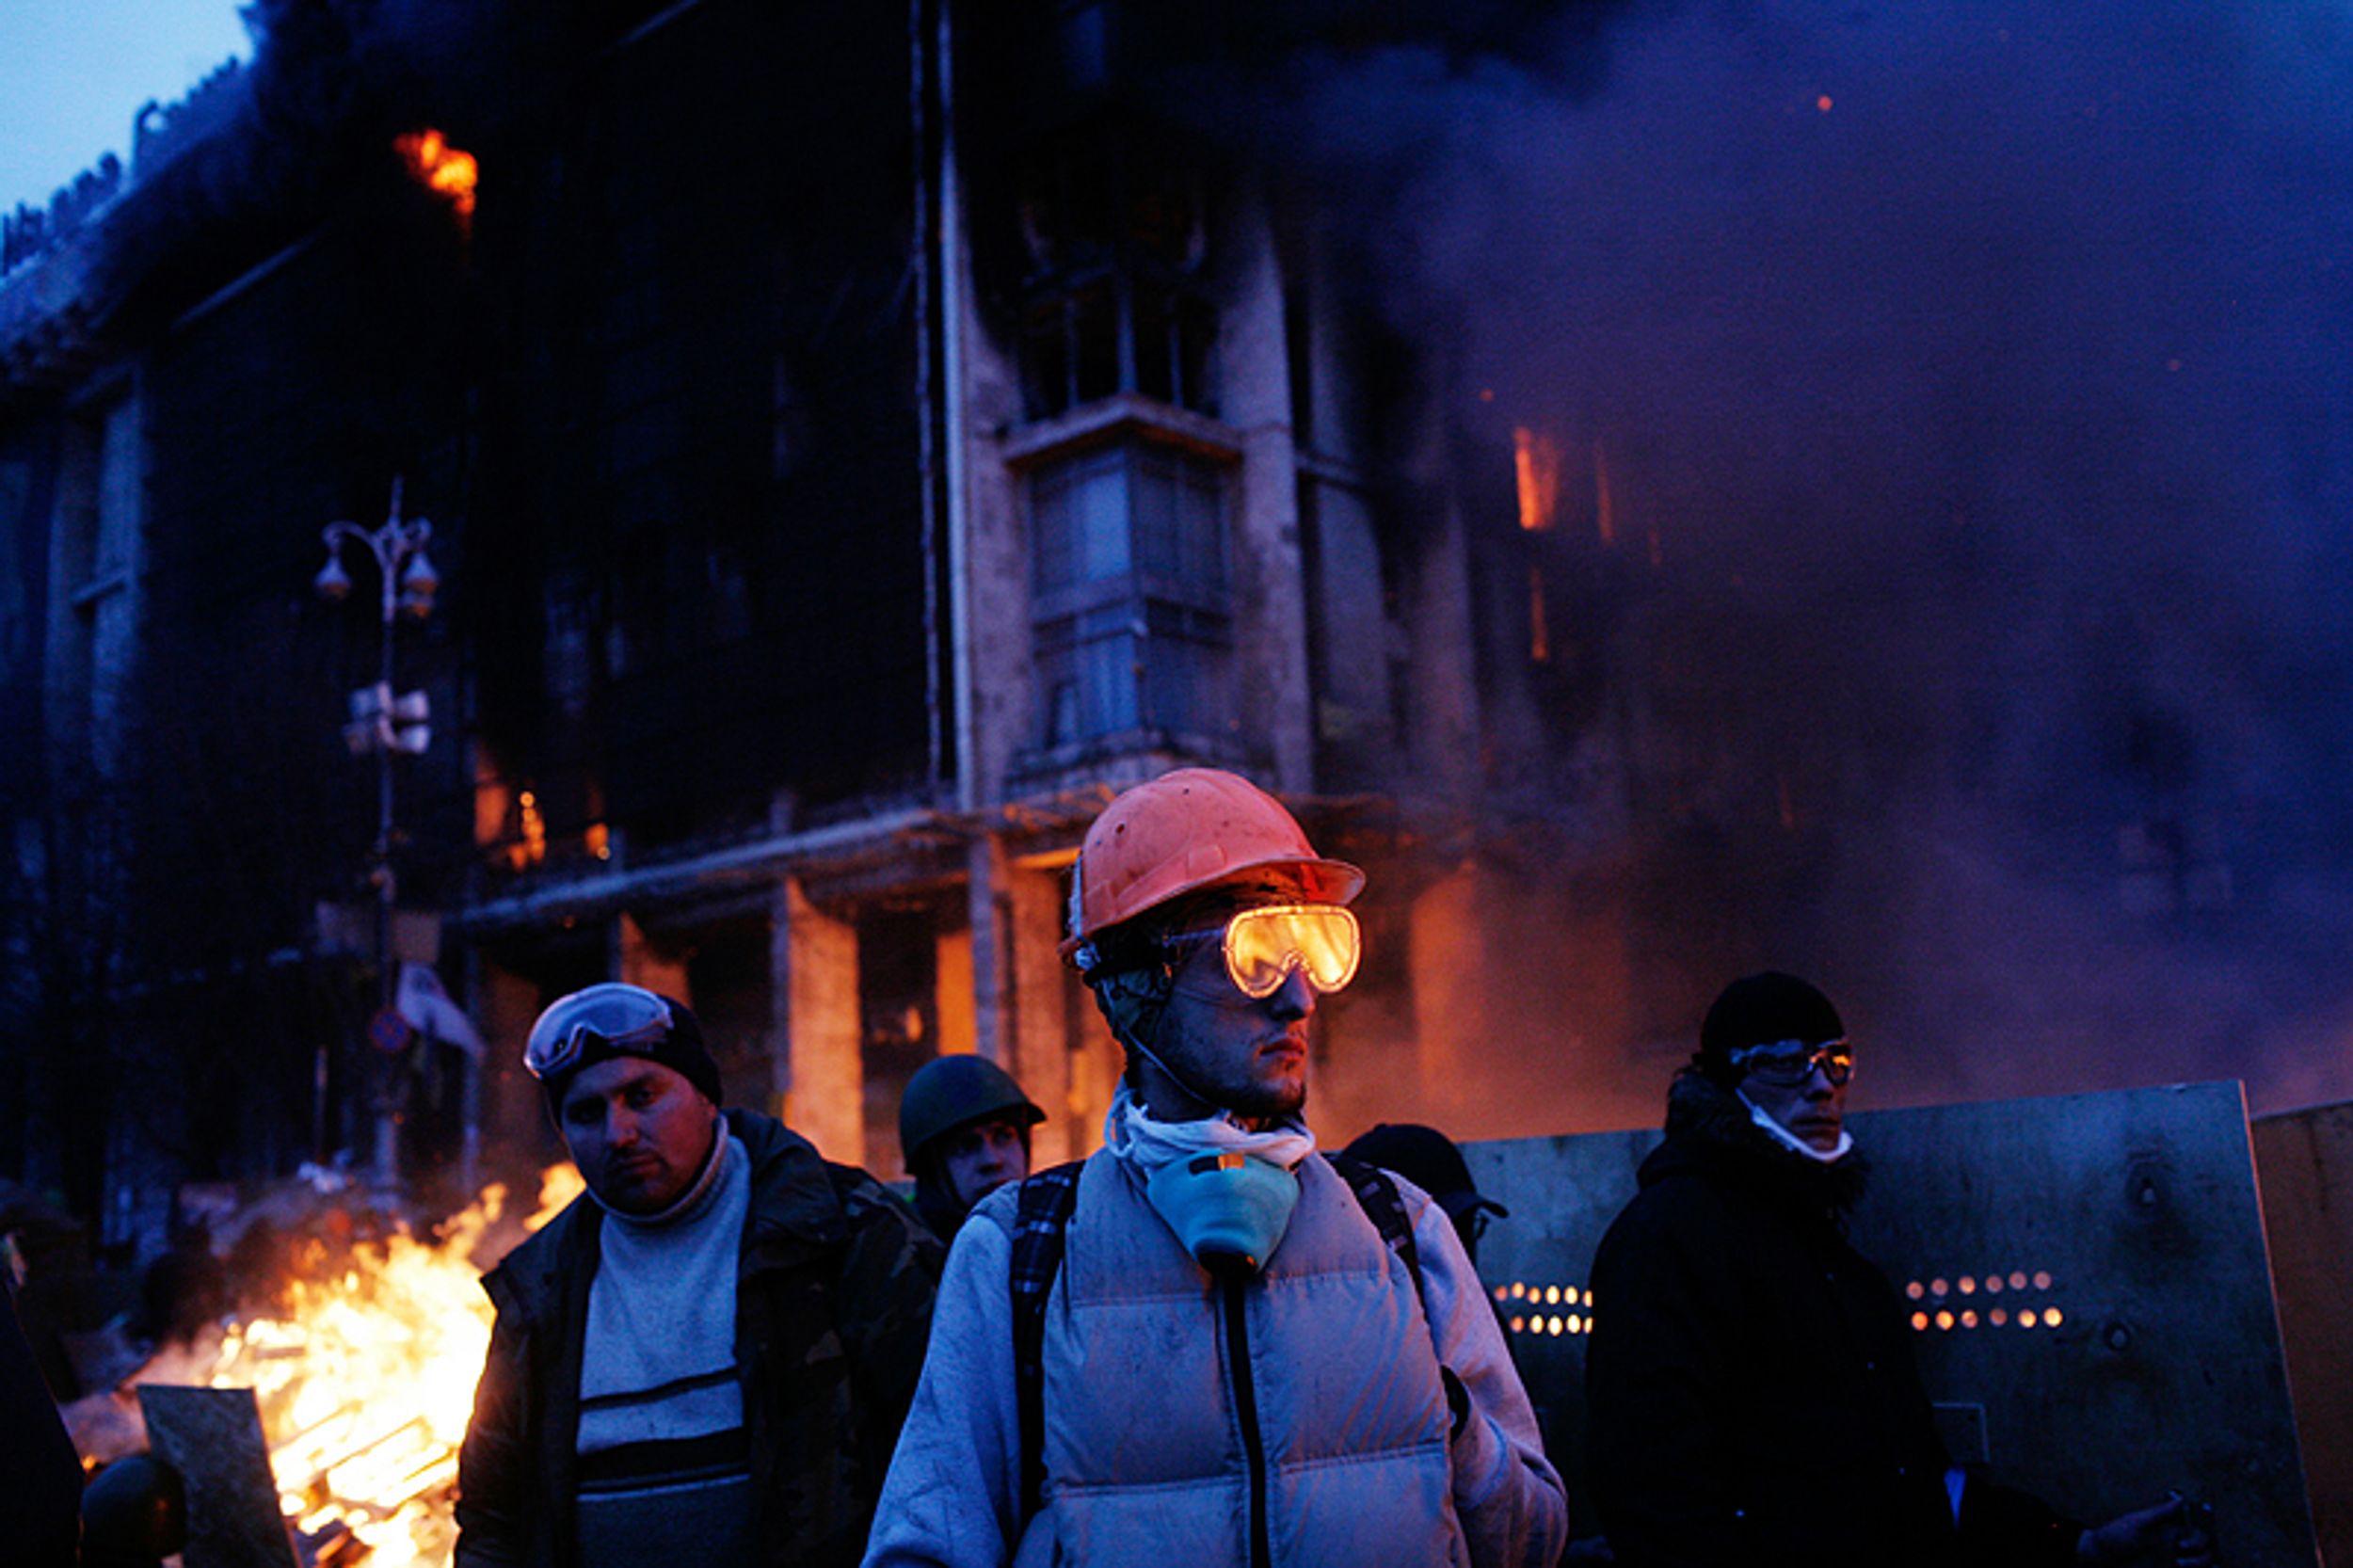 Euromaidan. Rough Cut